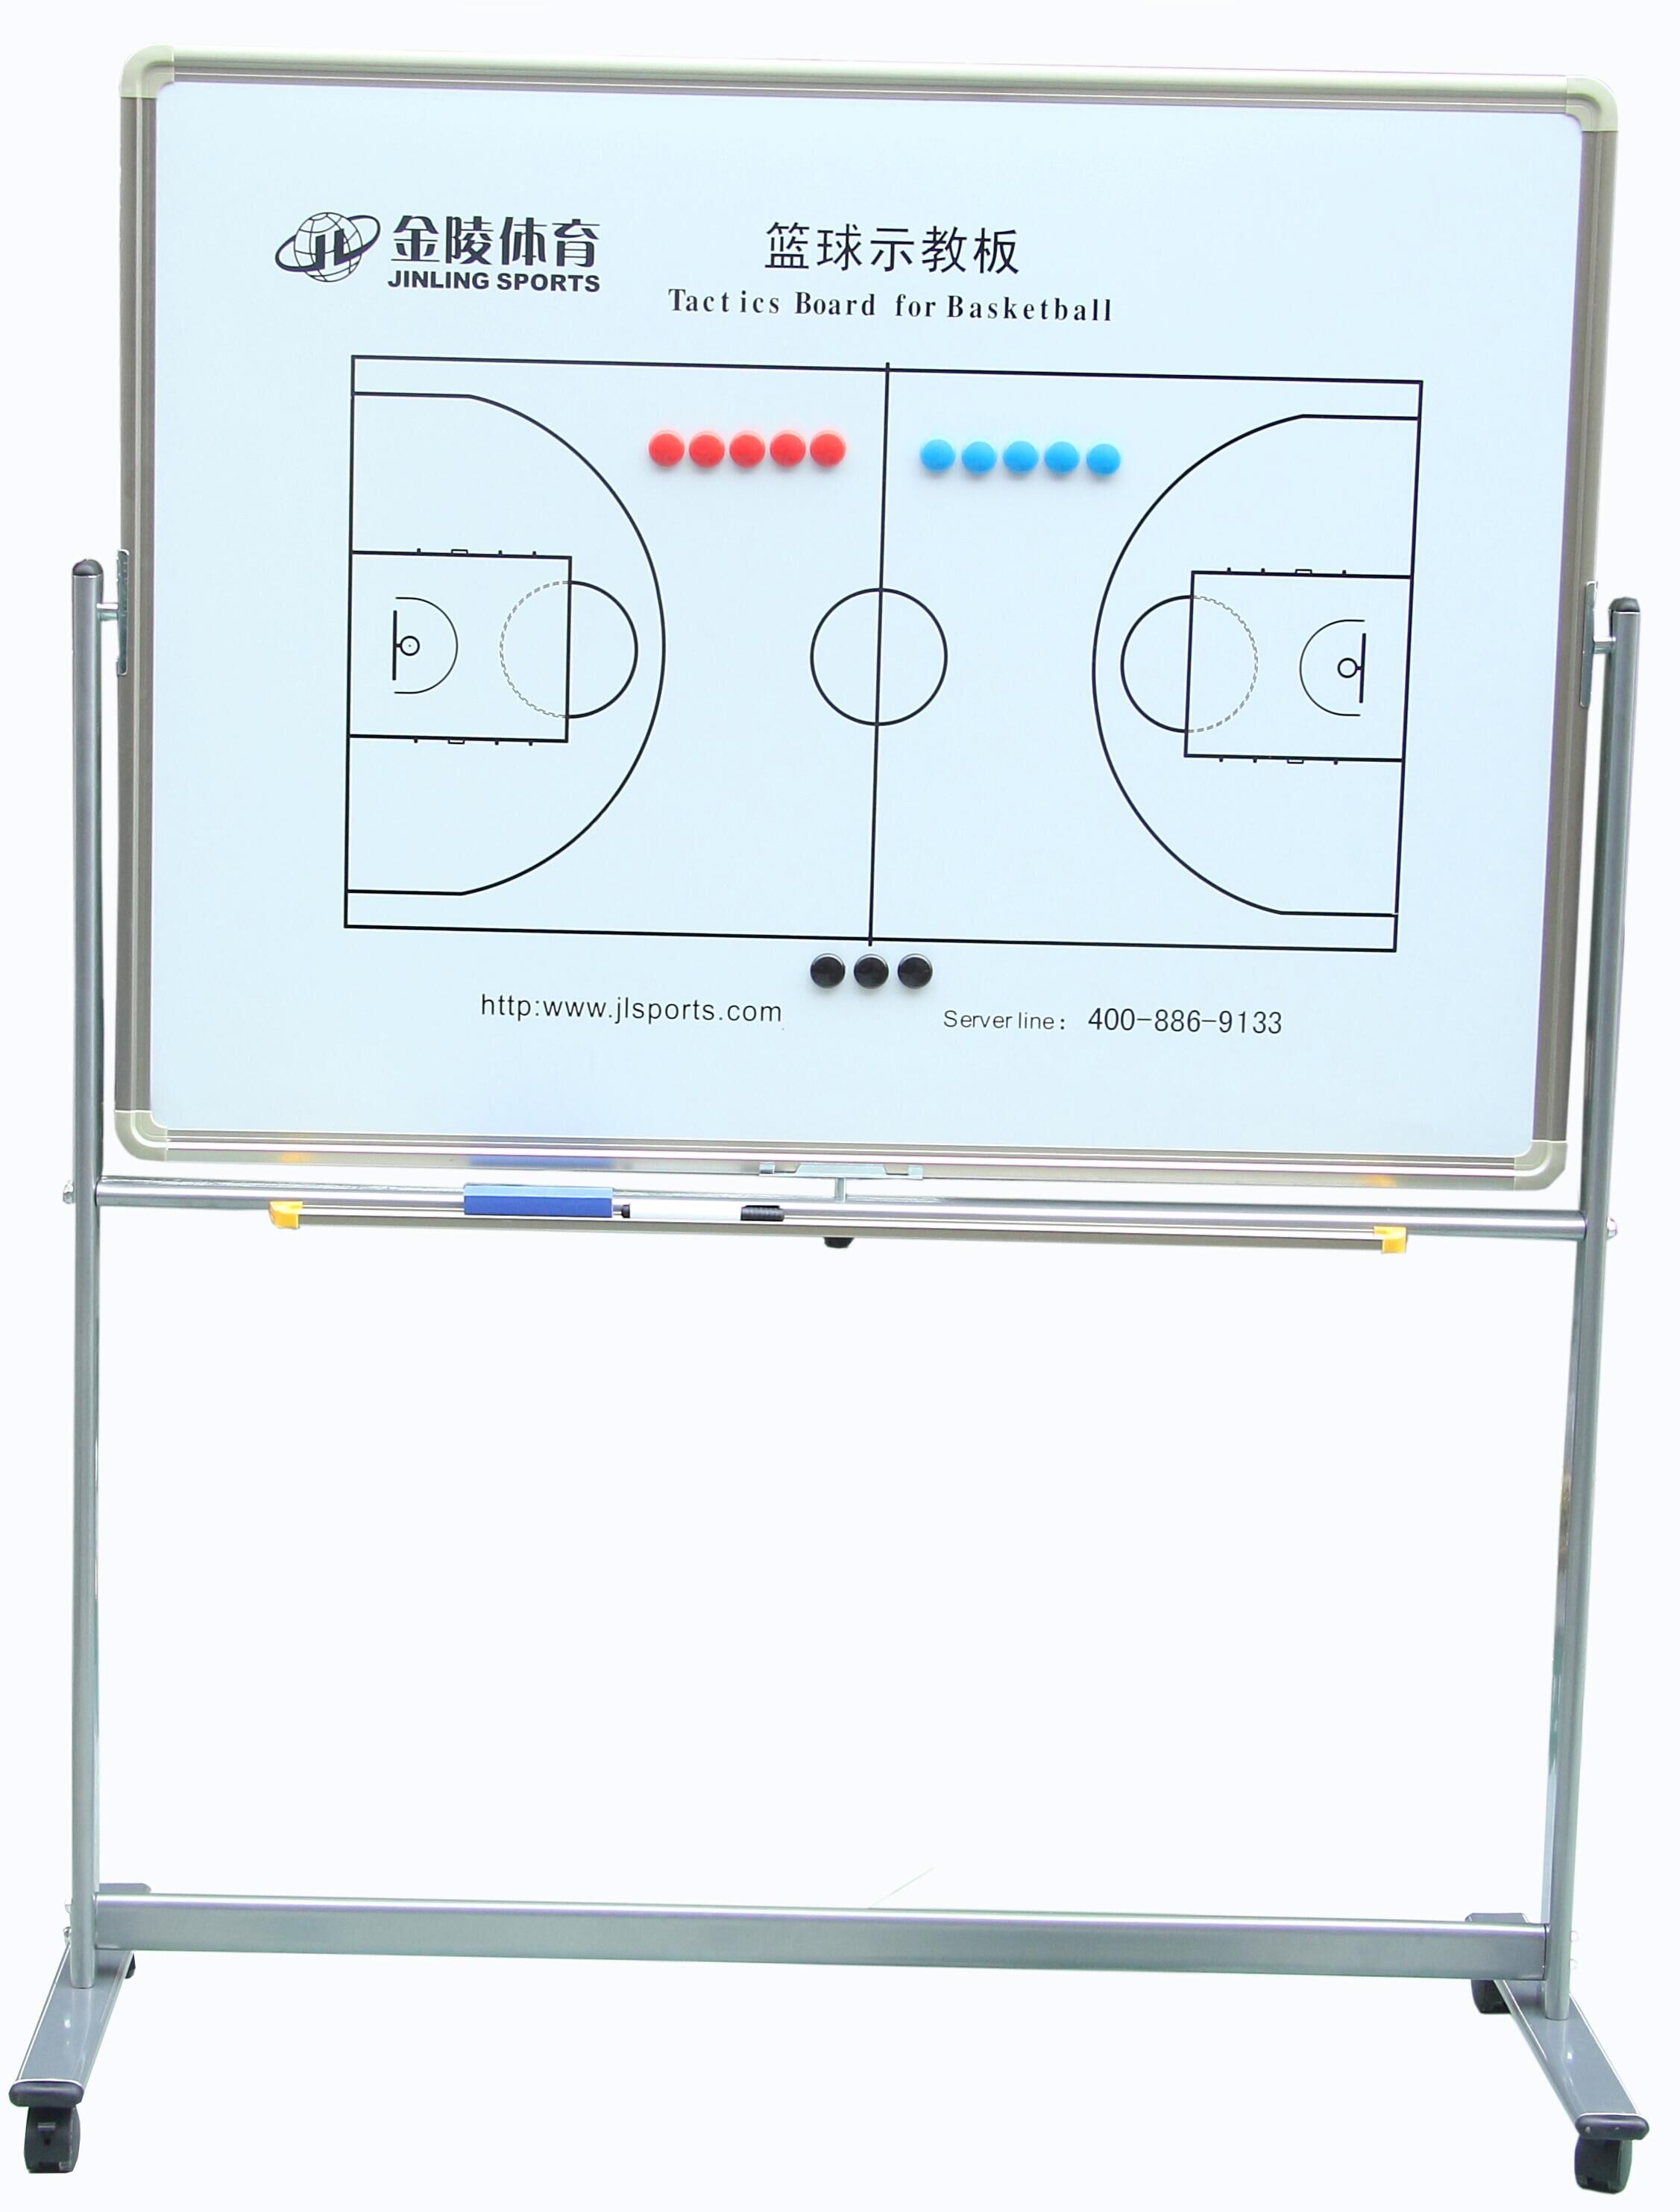 Basketball Coaching Board SJB-2 Basketball Court Tactical Board 11131 Coach Edition Game Layout Board Layout Board